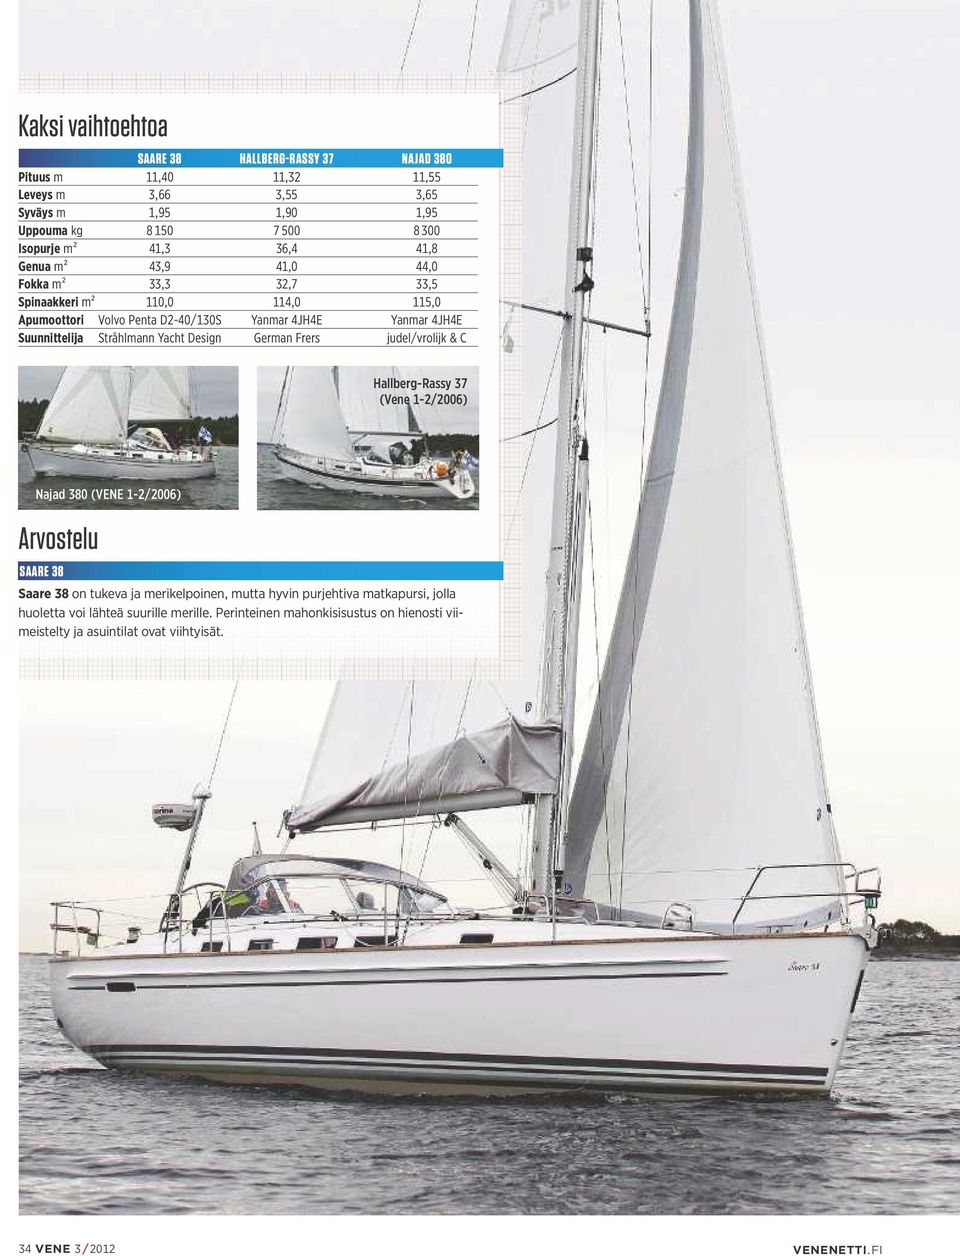 Yacht Design German Frers judel/vrolijk & C Hallberg-Rassy 37 (Vene 1-2/2006) Najad 380 (VeNe 1-2/2006) Arvostelu Saare 38 on tukeva ja merikelpoinen, mutta hyvin